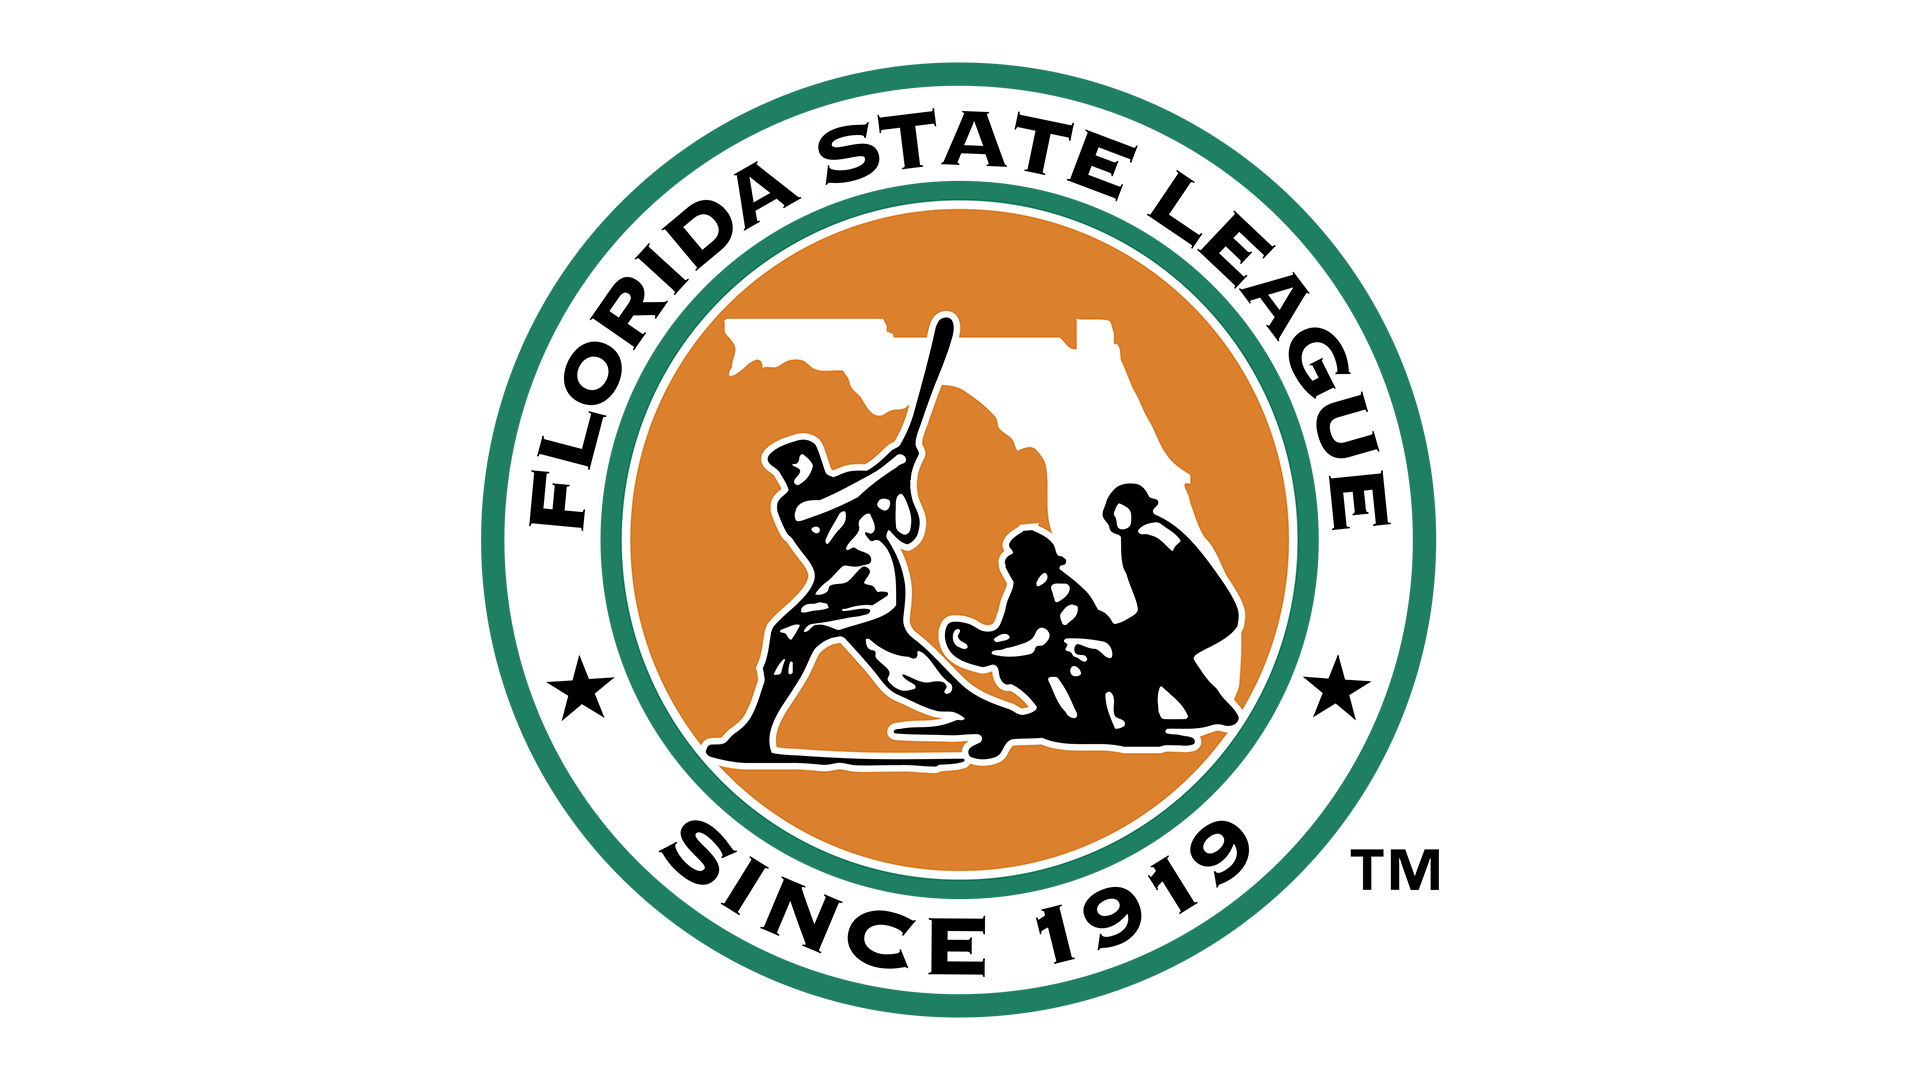 Florida State Baseball Logo - Florida State League logo, symbol, meaning, History and Evolution